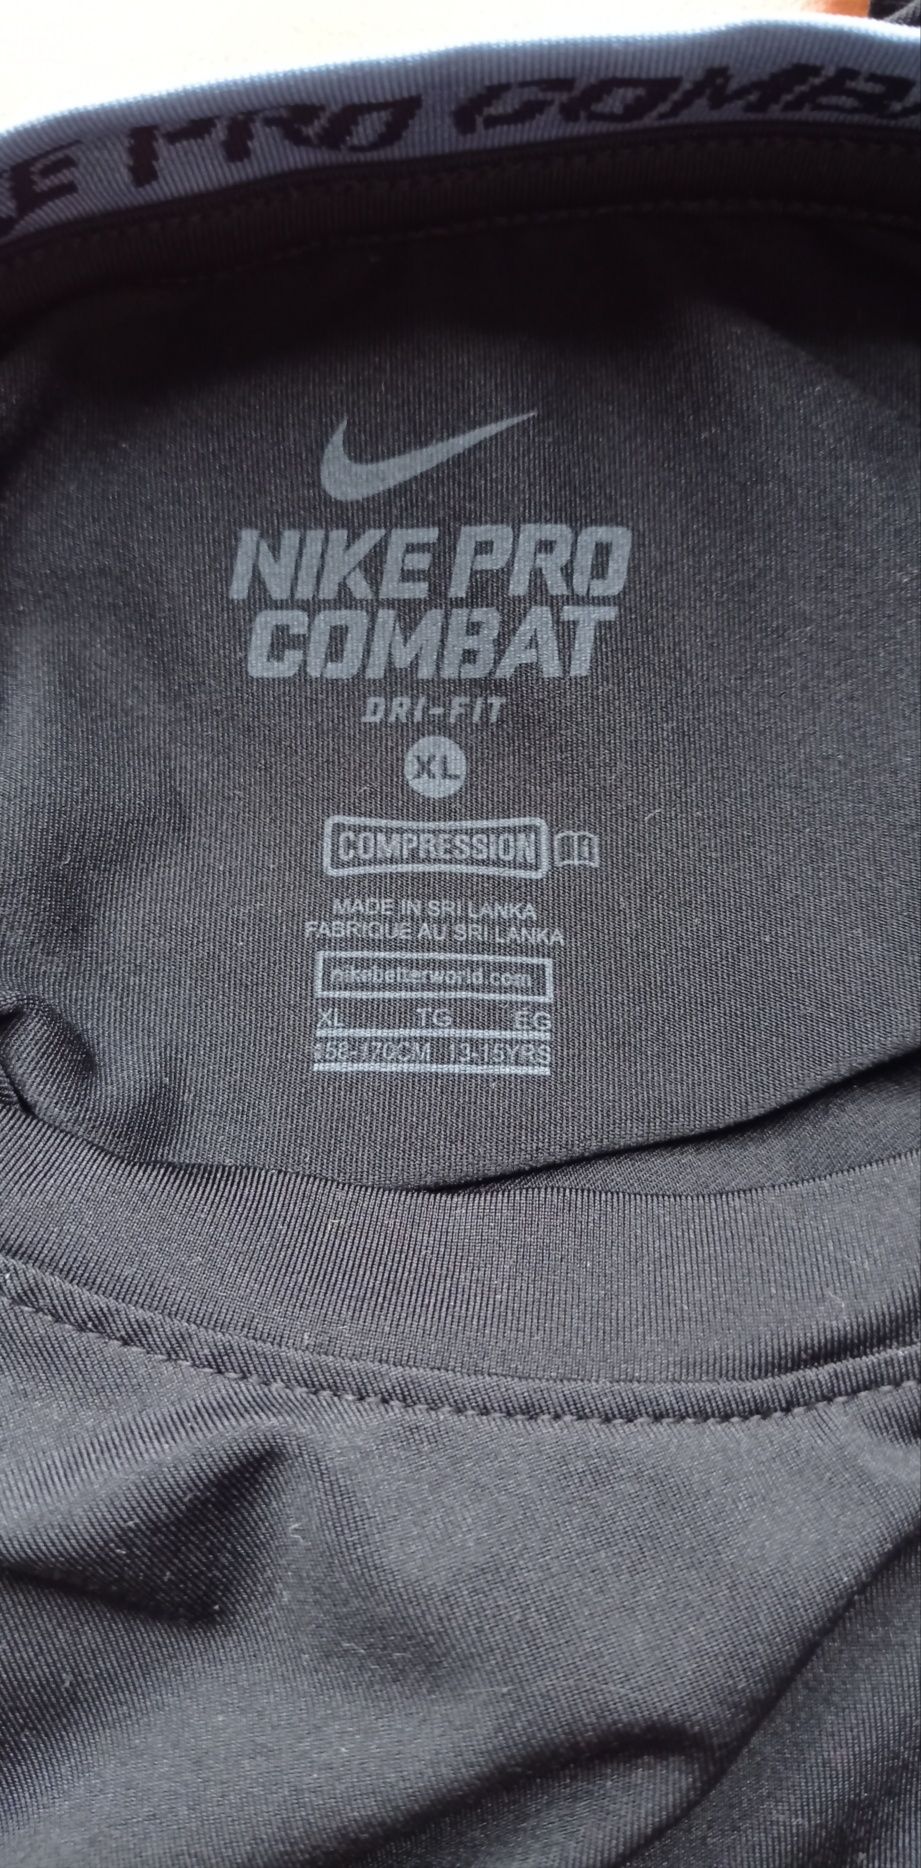 Koszulka treningowa Nike Pro Combat 13-15 lat